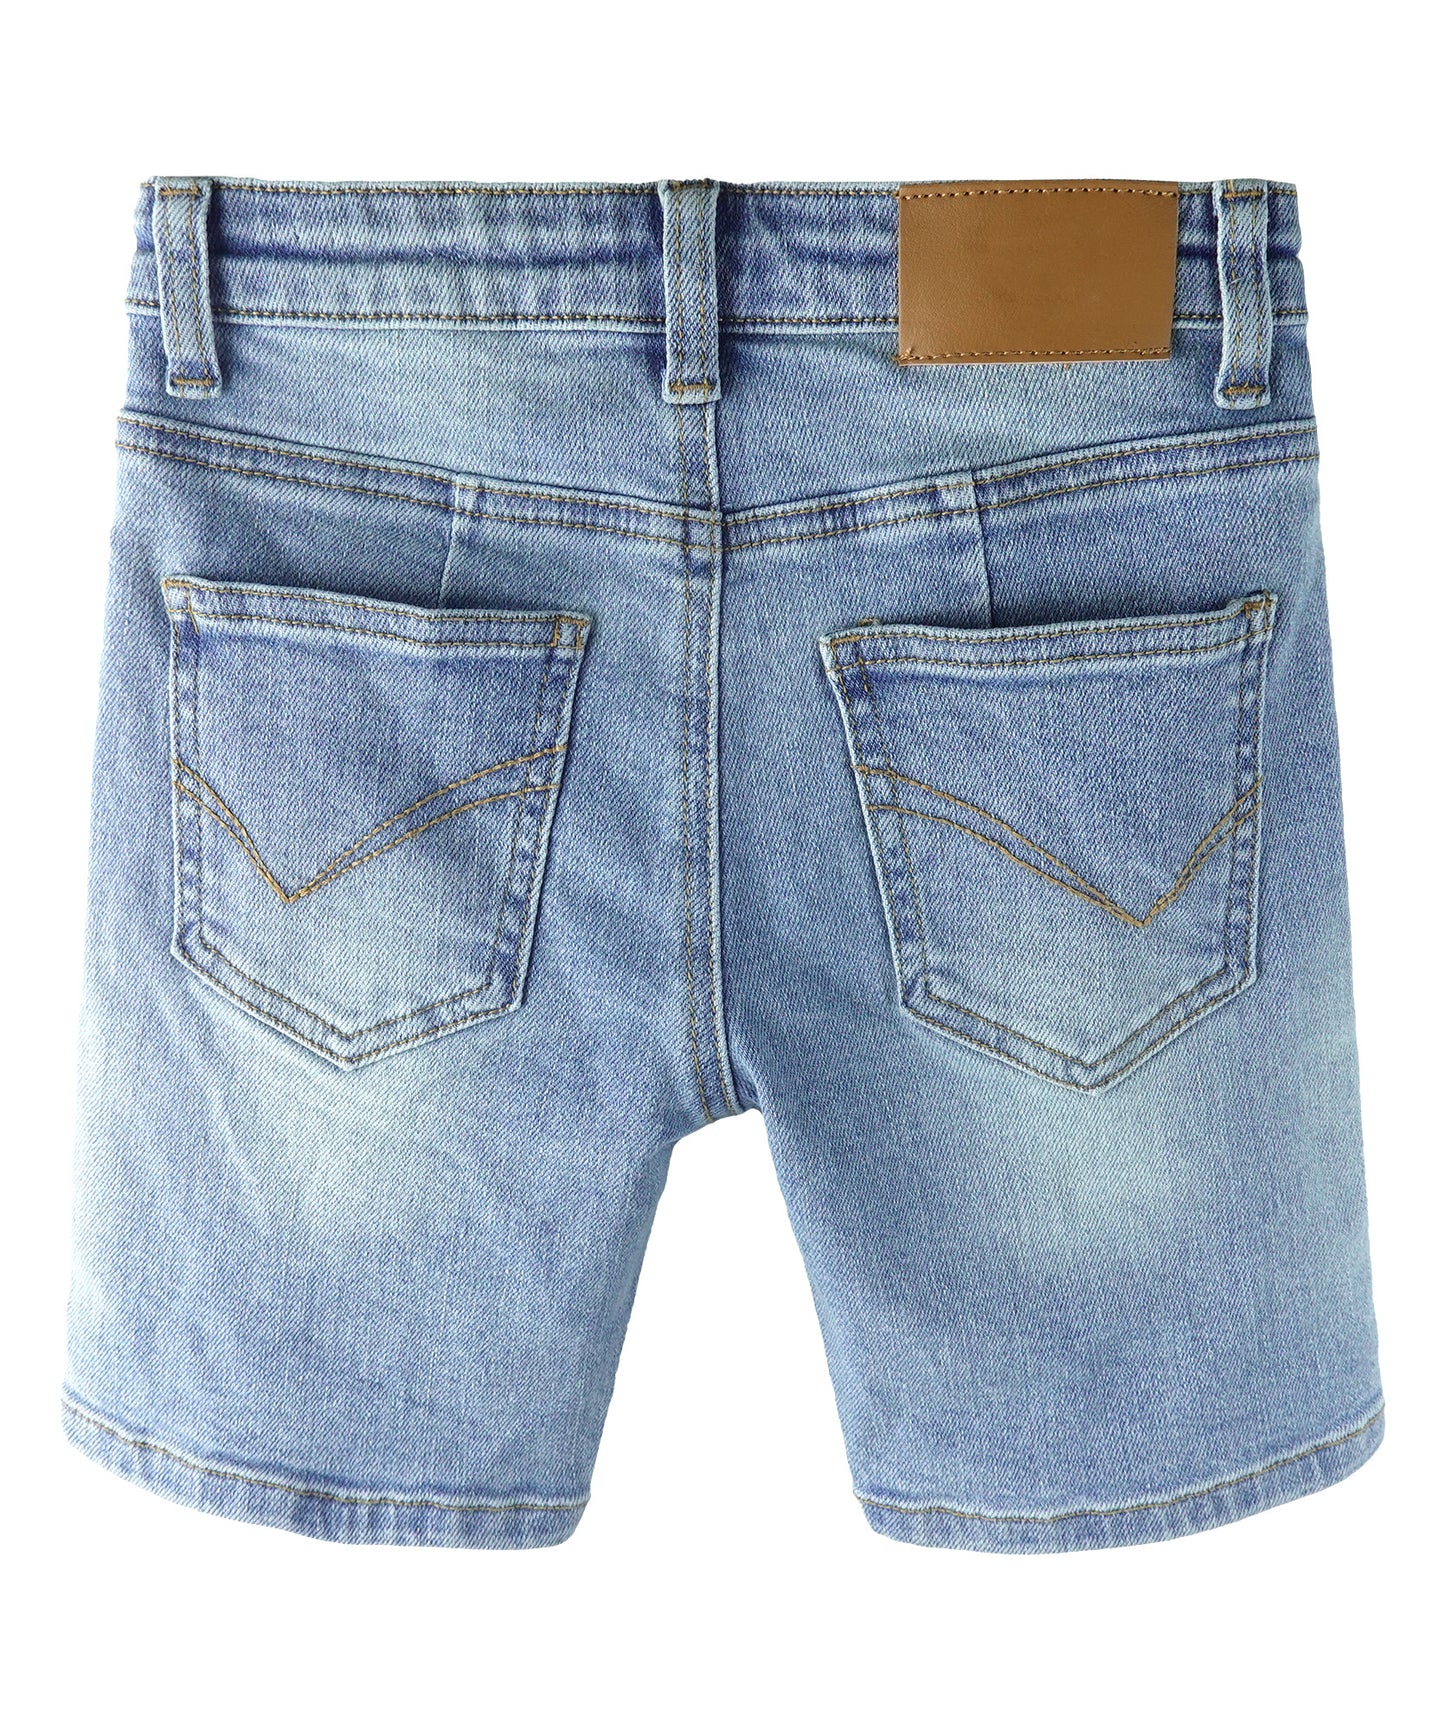 Big Child Denim Shorts,Strtchy Denim Elastic WaistBand Inside Ripped Summer Short Pants